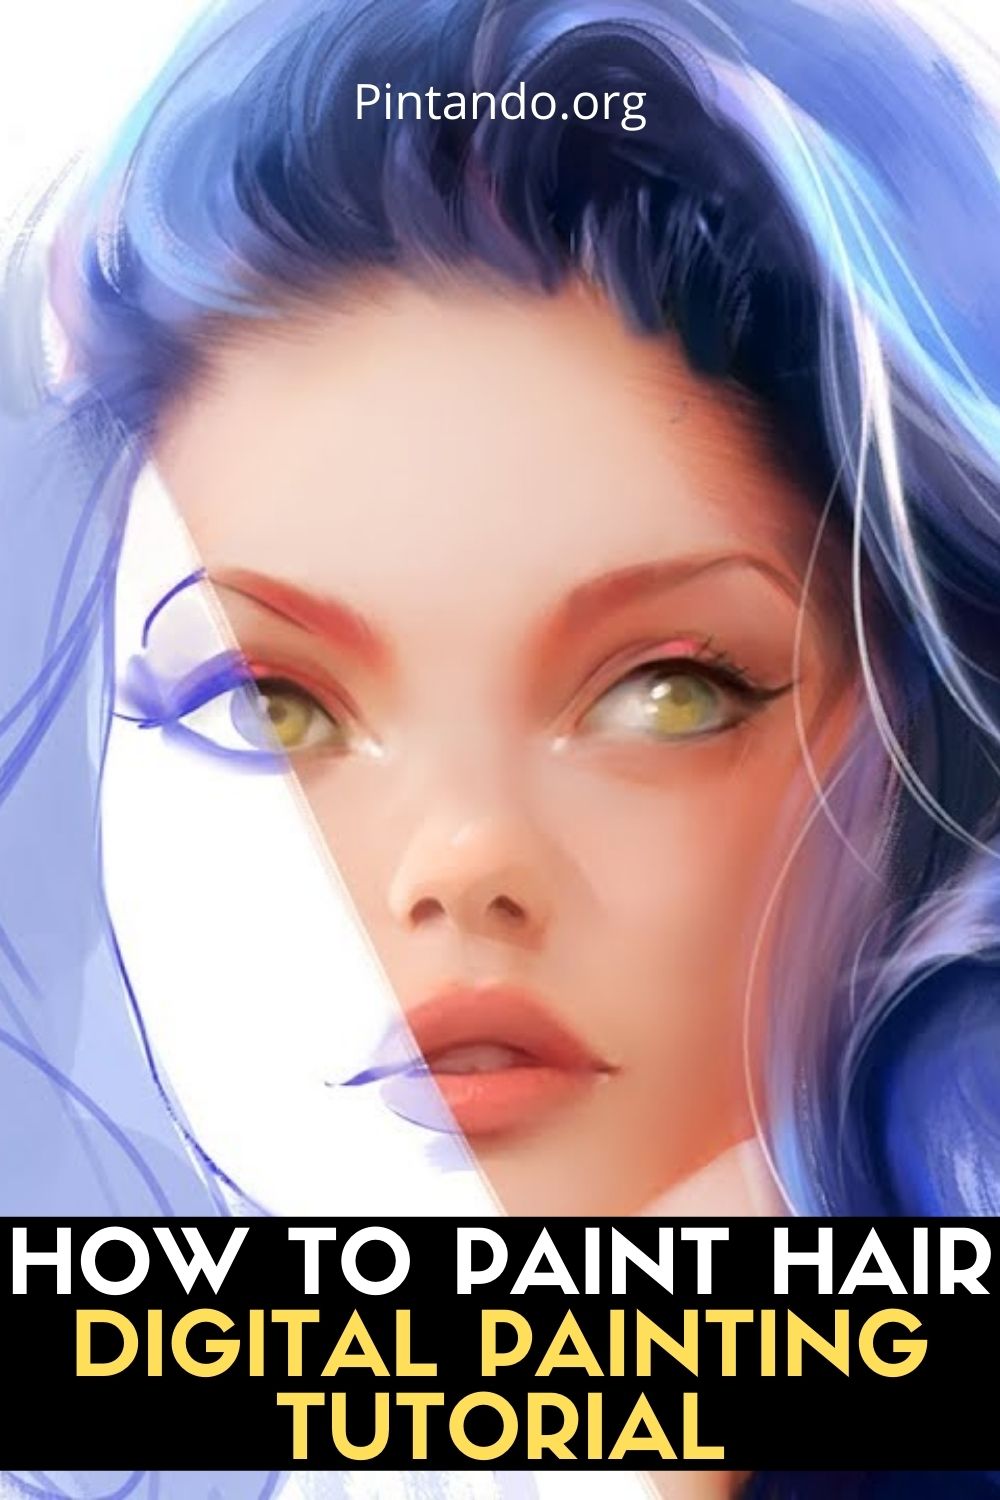 HOW TO PAINT HAIR - DIGITAL PAINTING TUTORIAL